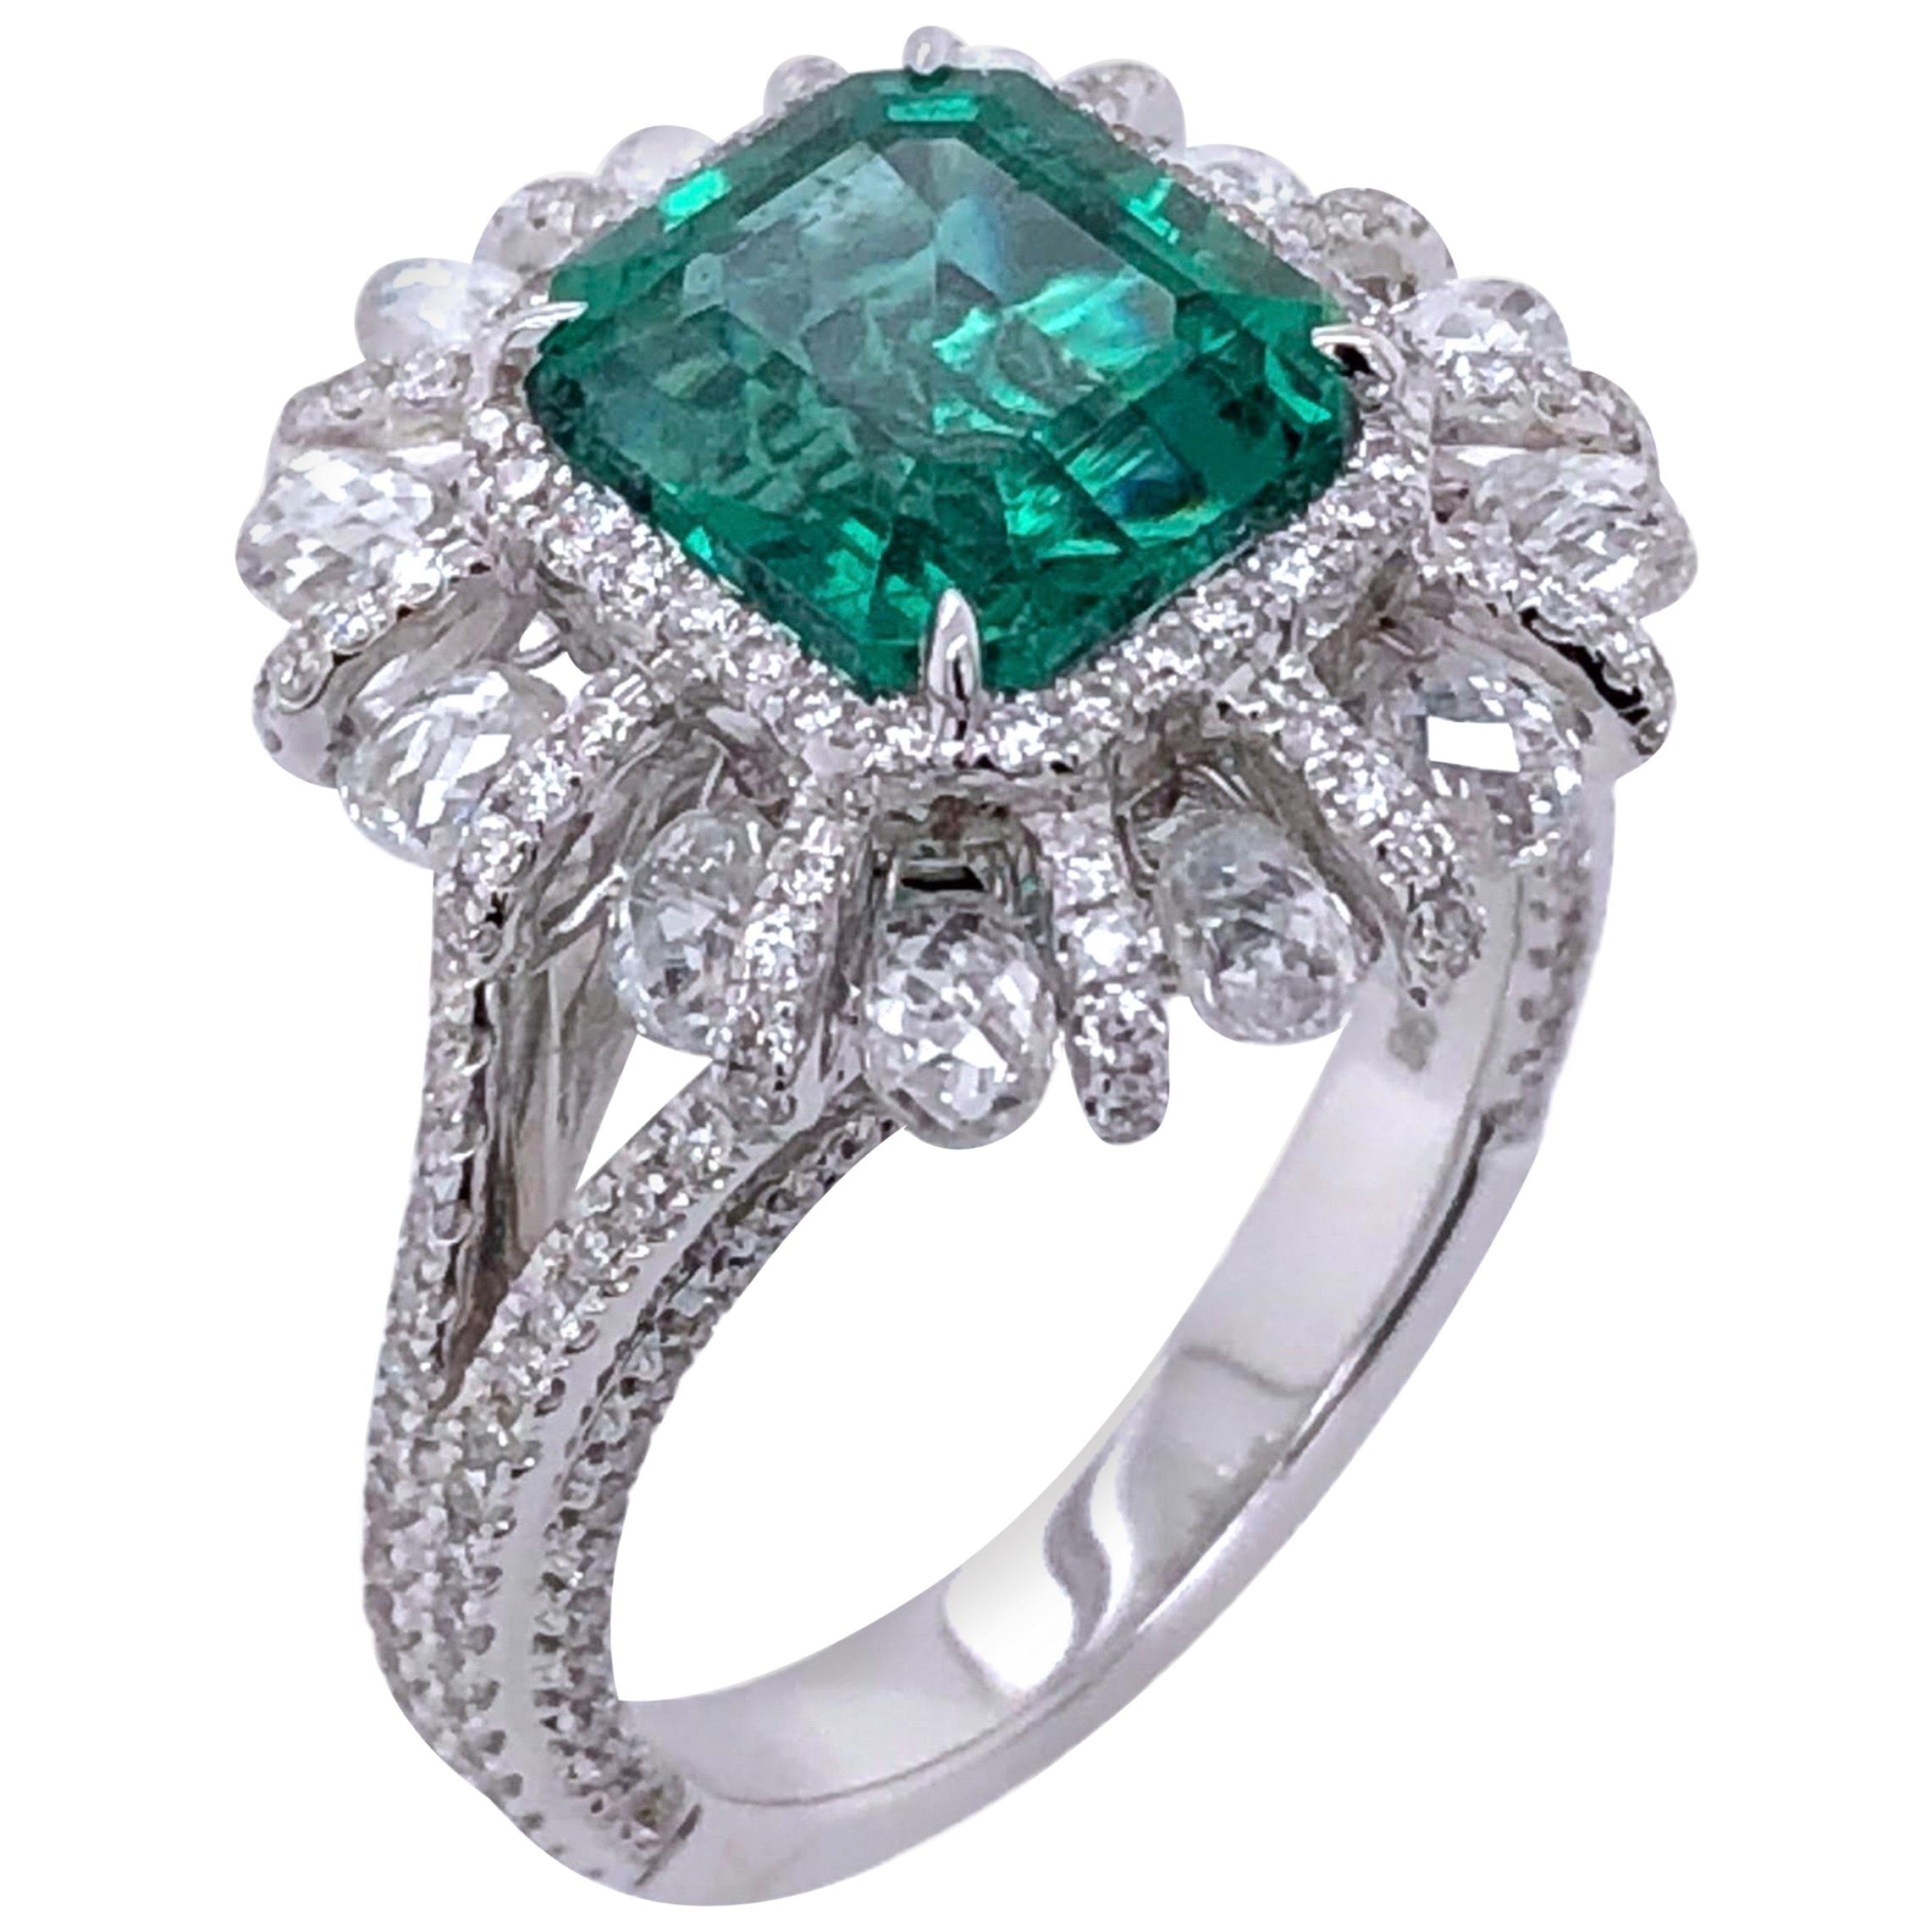 Paris Craft House 2.98 Carat Emerald Diamond Ring in 18 Karat White Gold For Sale